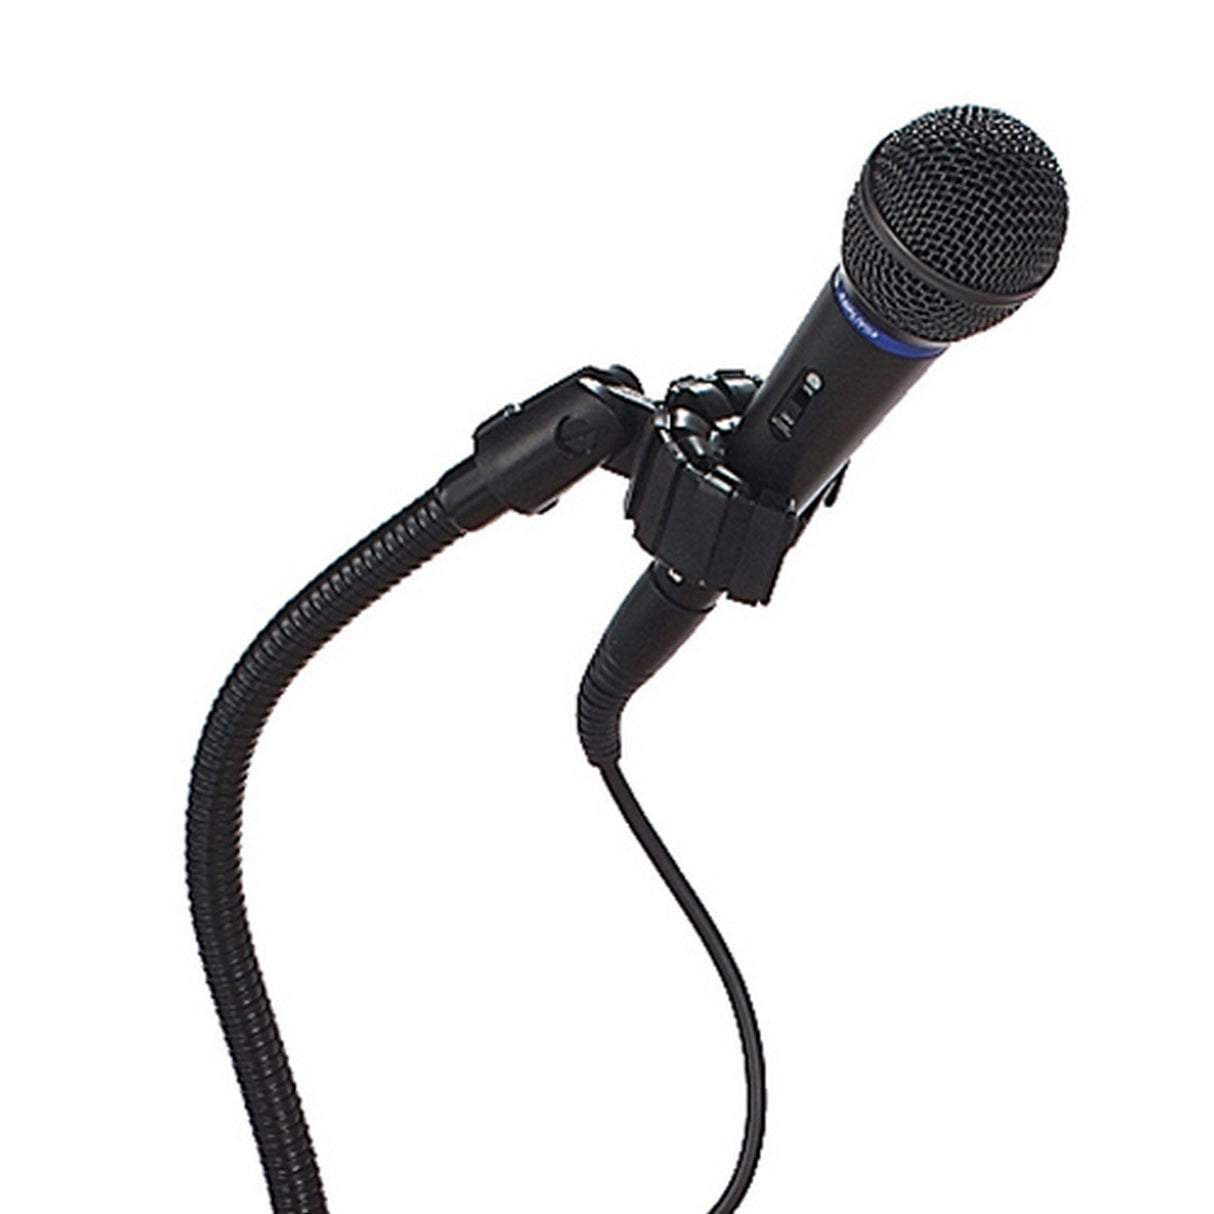 AmpliVox S2030A Handheld Microphone Kit